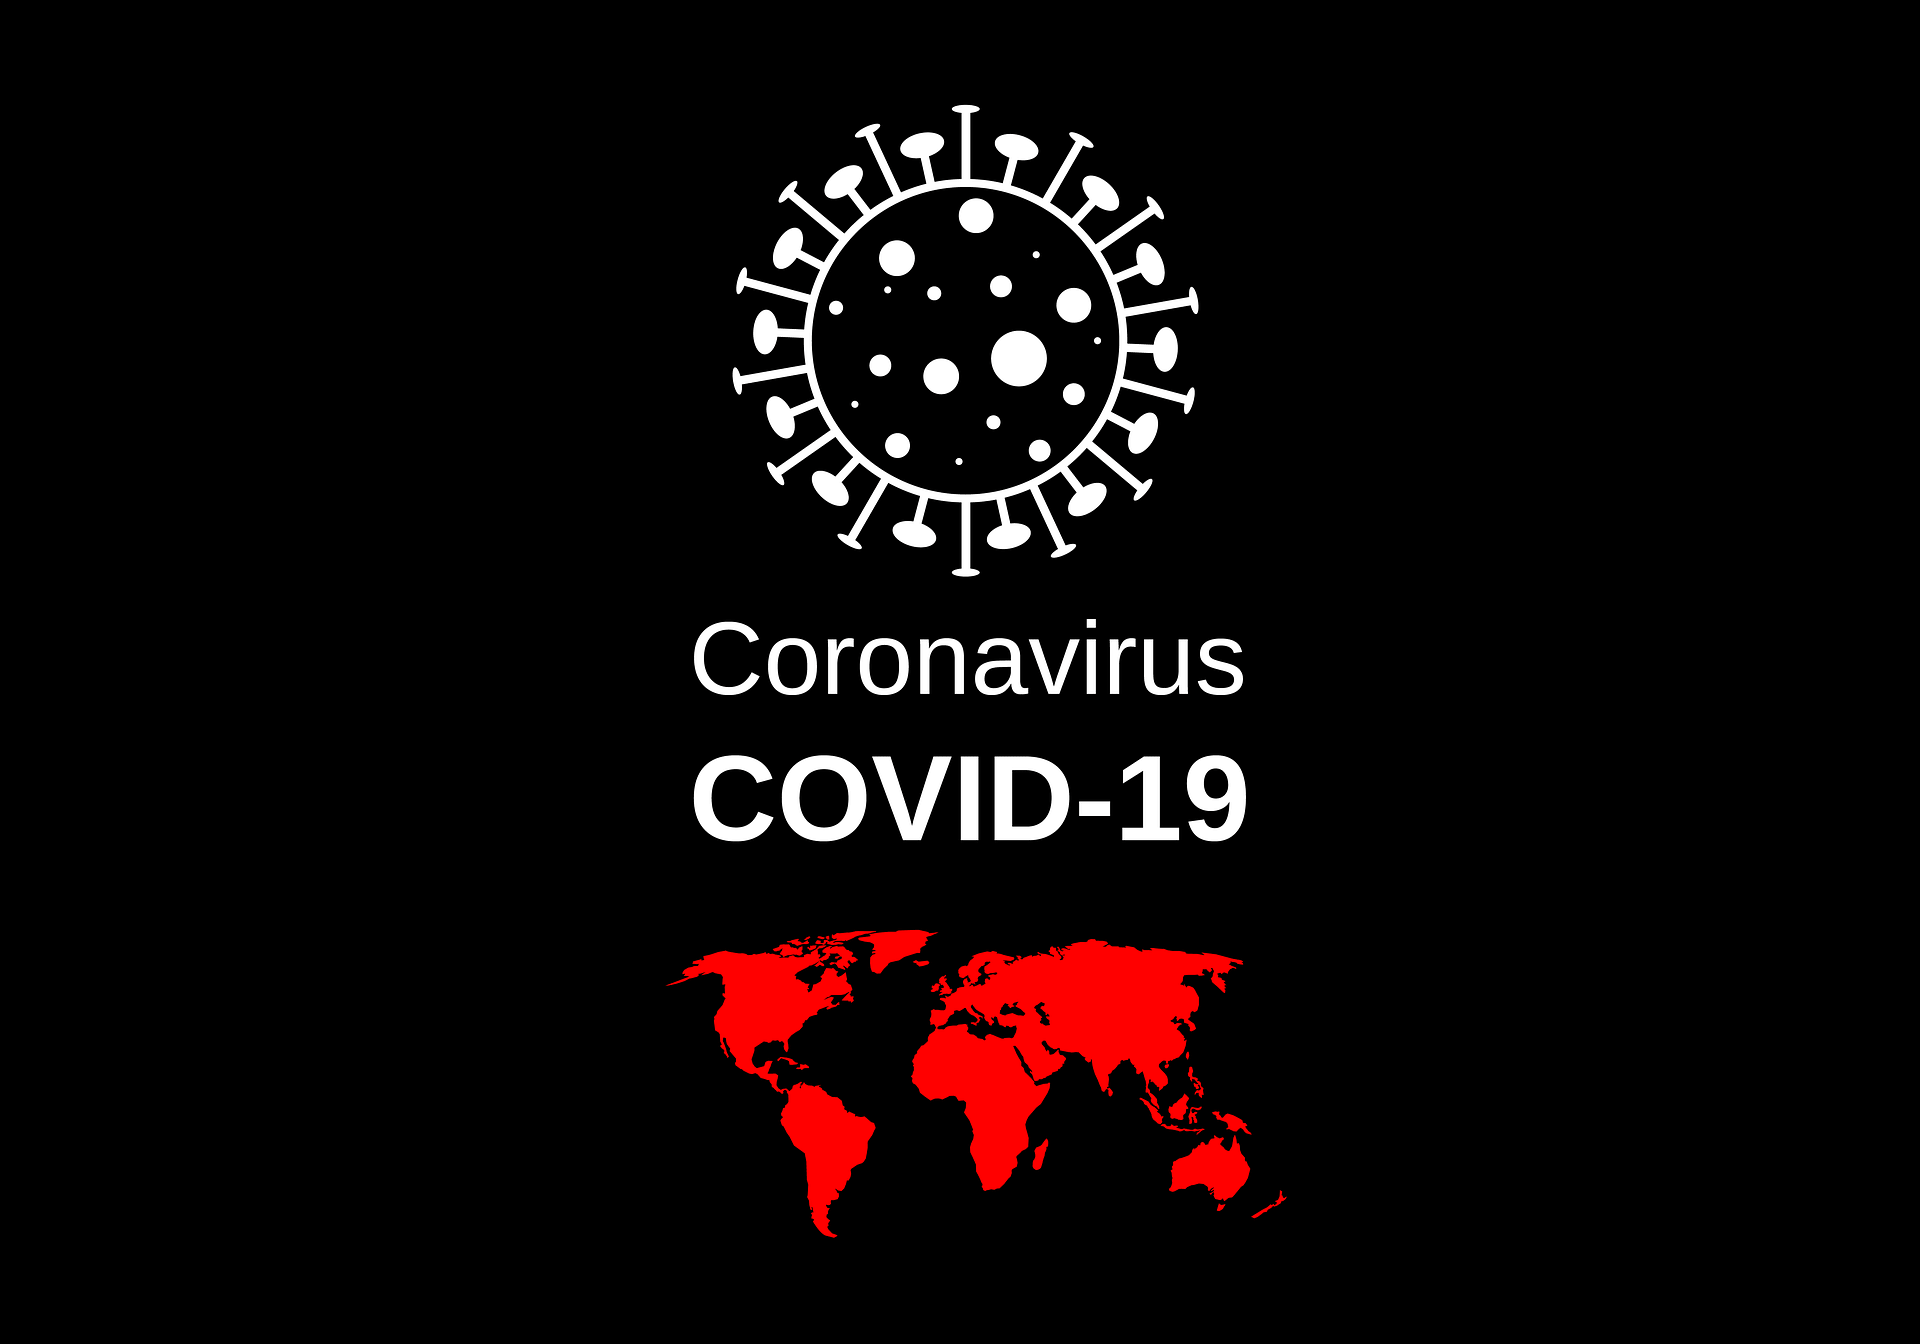 Coronavirus COVID-19 image on blog post Families First Coronavirus Response Act - Small Business Exemptions